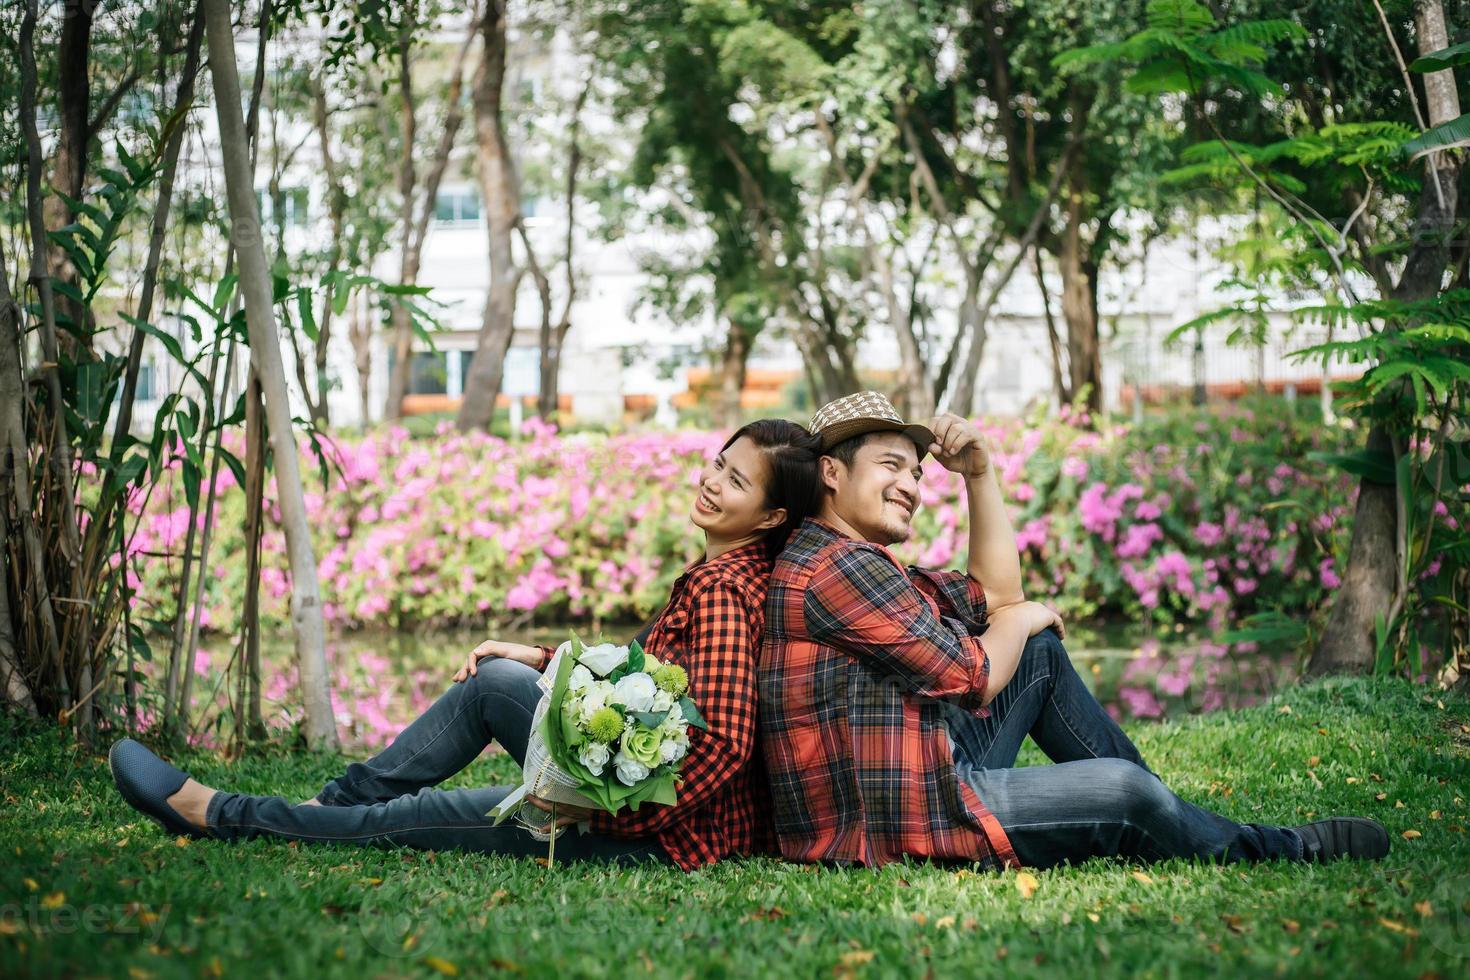 romântico jovem casal sentado dentro jardim foto